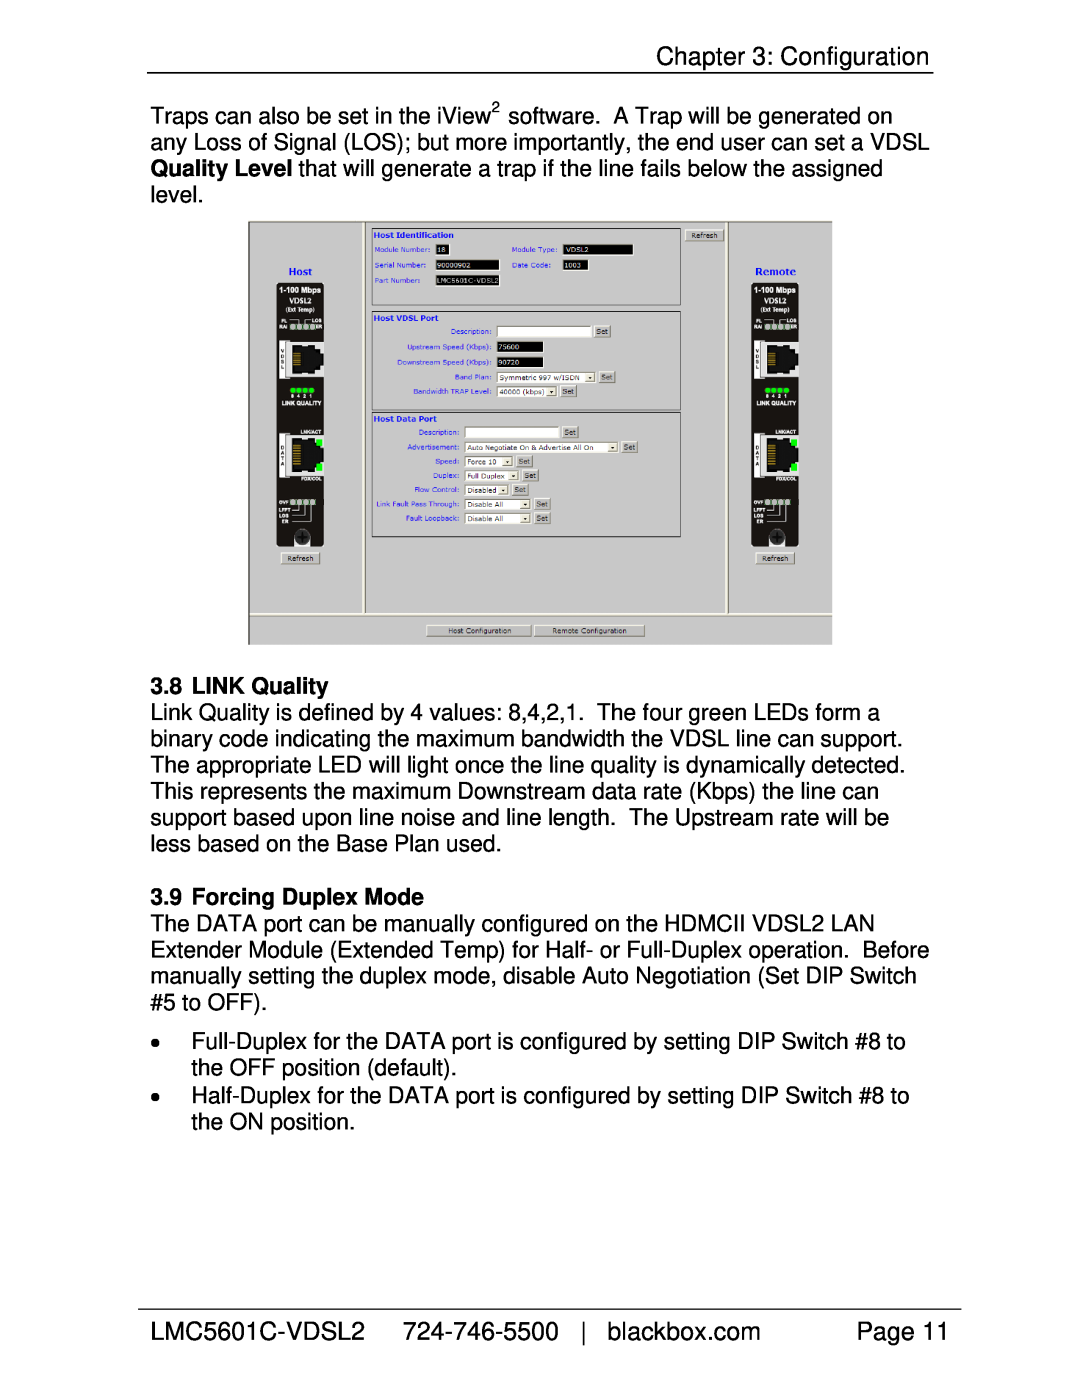 Black Box HDMCII VDSL2 LAN Extender Module (Extended Temp) Page, Configuration, LMC5601C-VDSL2 724-746-5500 blackbox.com 